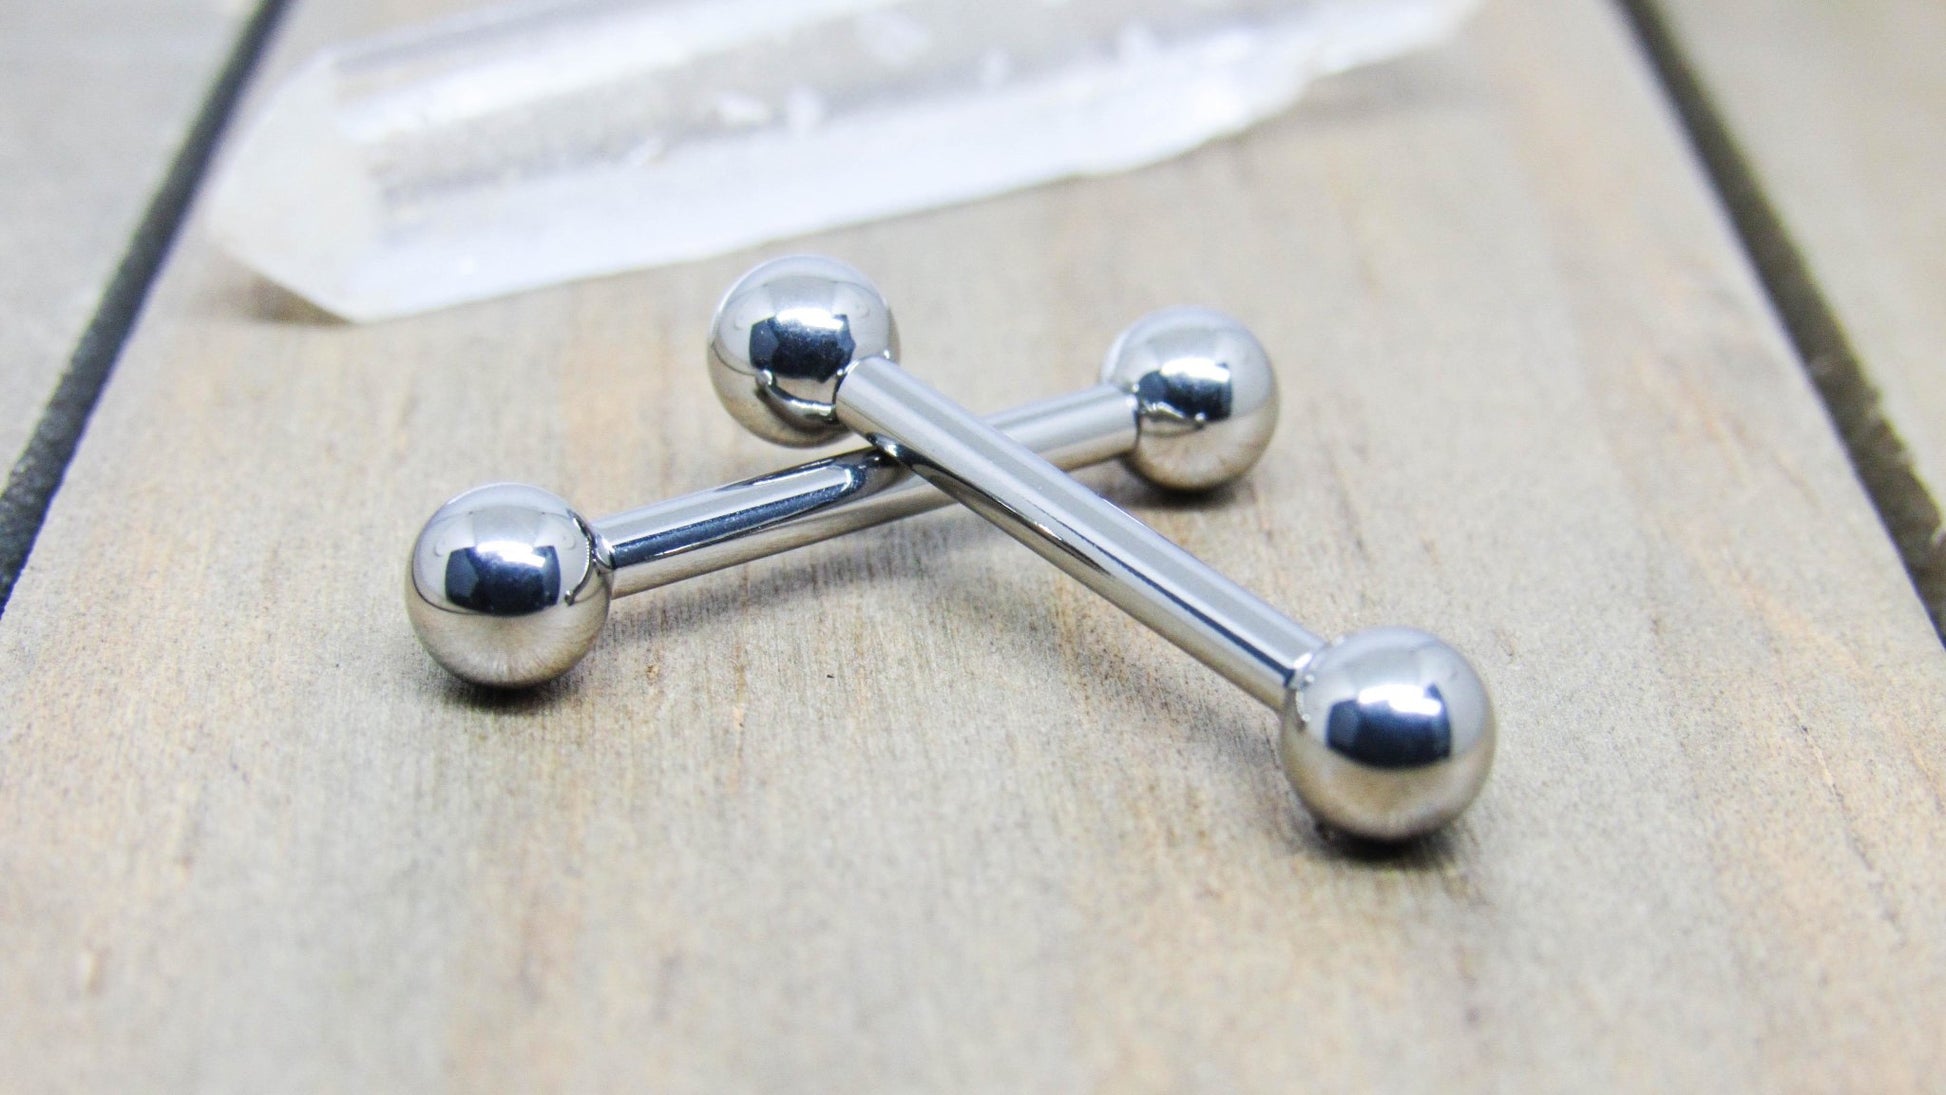 12g Titanium nipple piercing barbells 5/8" straight bars internally threaded 5mm ball ends pair - SirenBodyJewelry